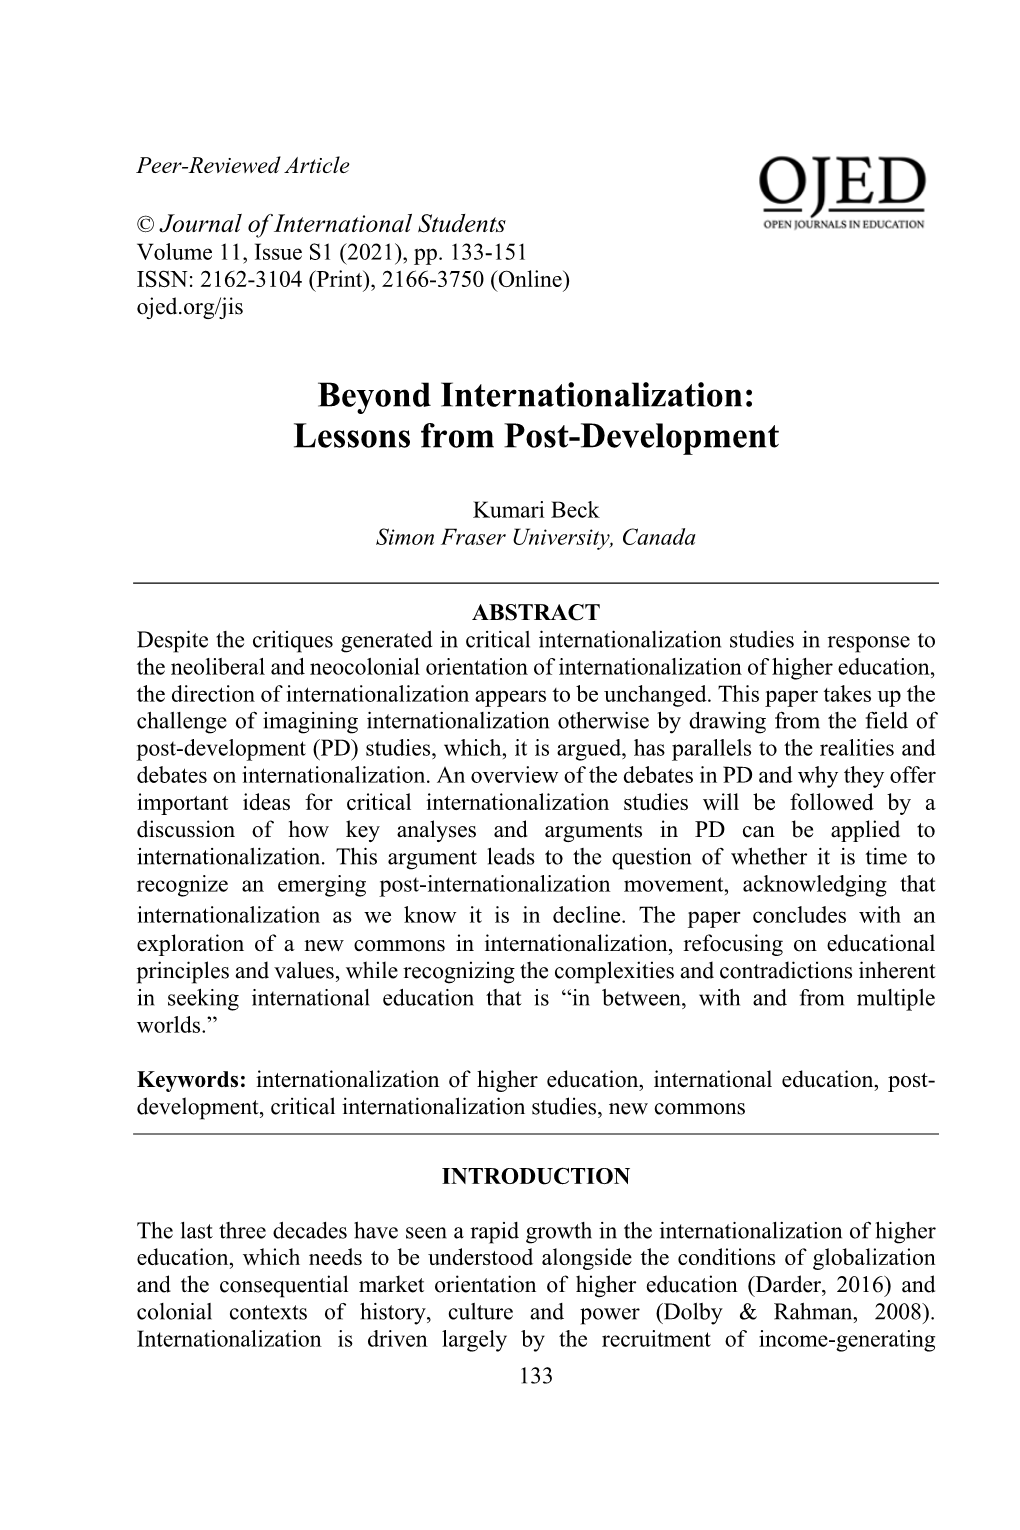 Beyond Internationalization: Lessons from Post-Development